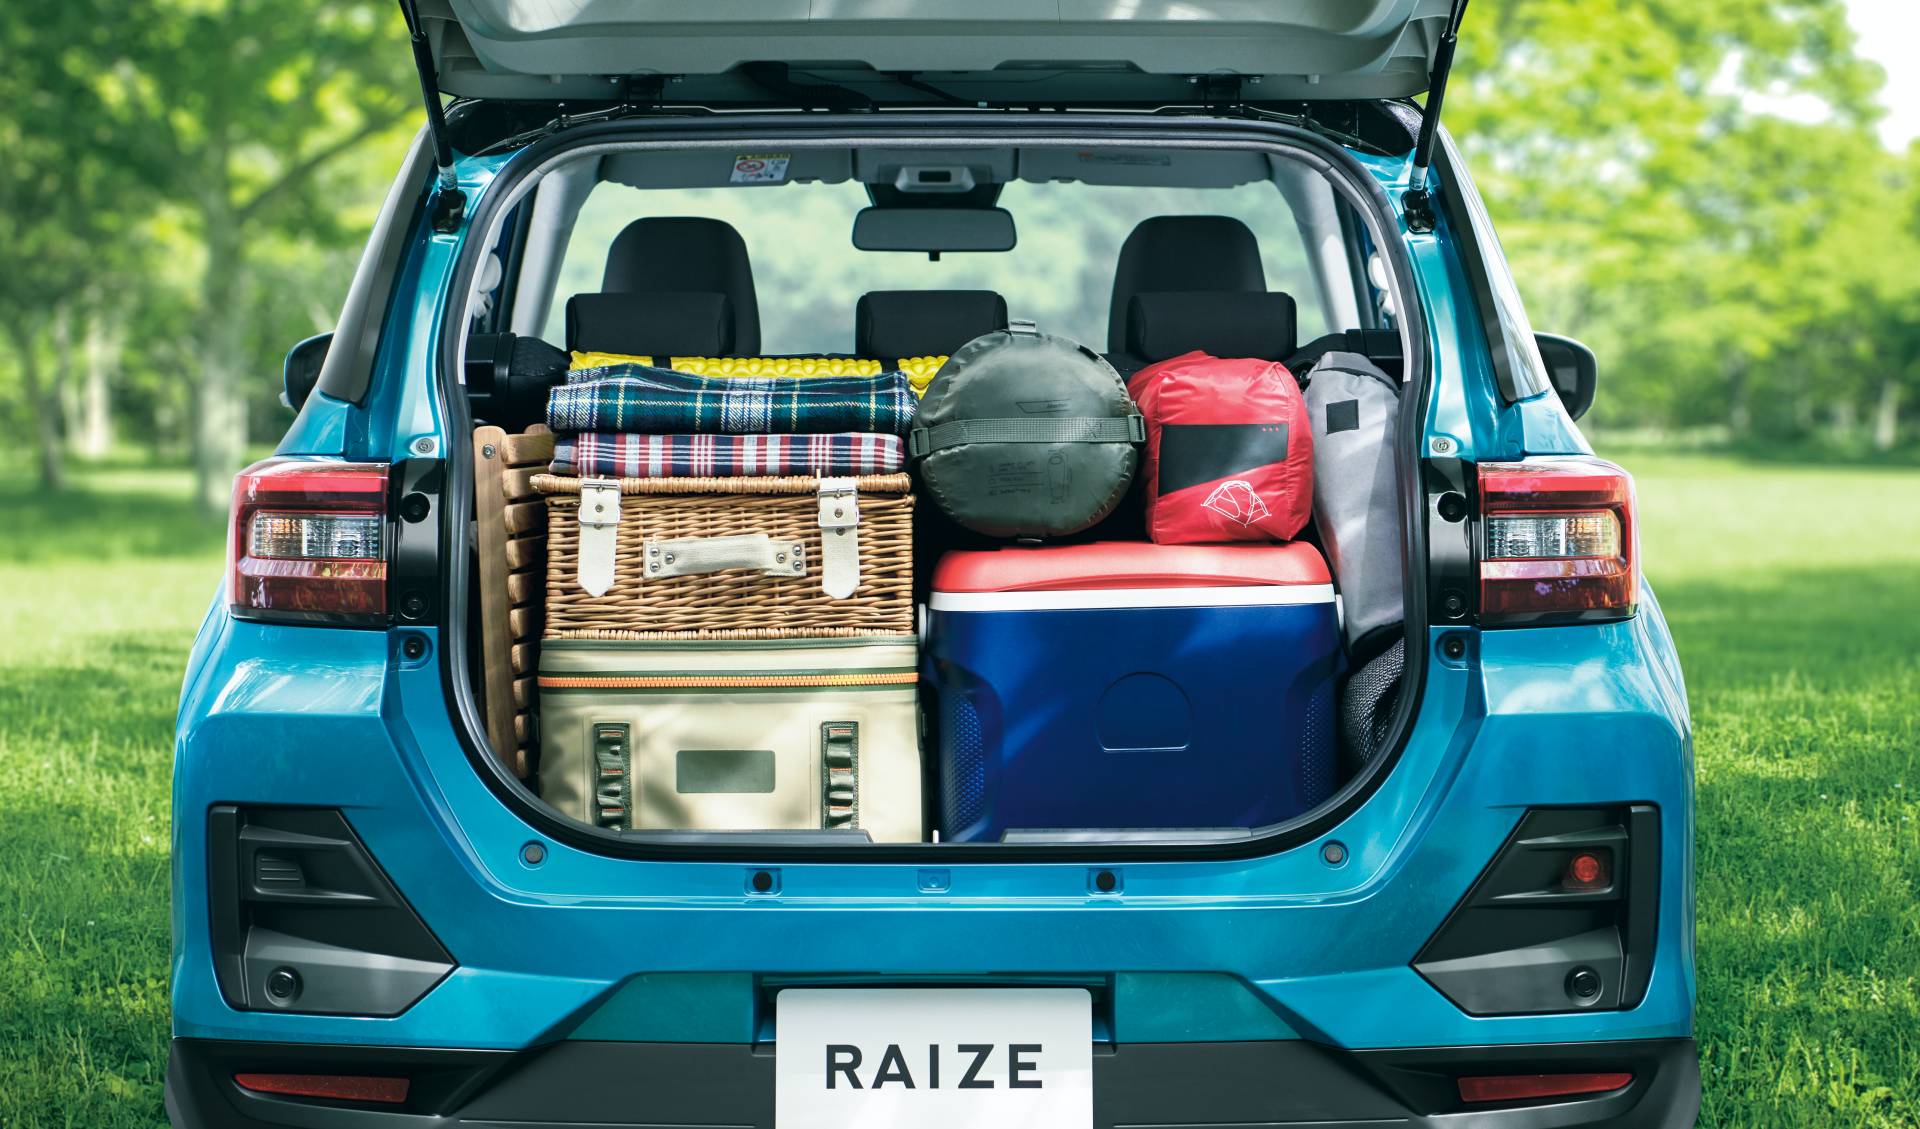 Toyota Raize 2020 - enjin 1.0 liter turbo, catat bacaan 